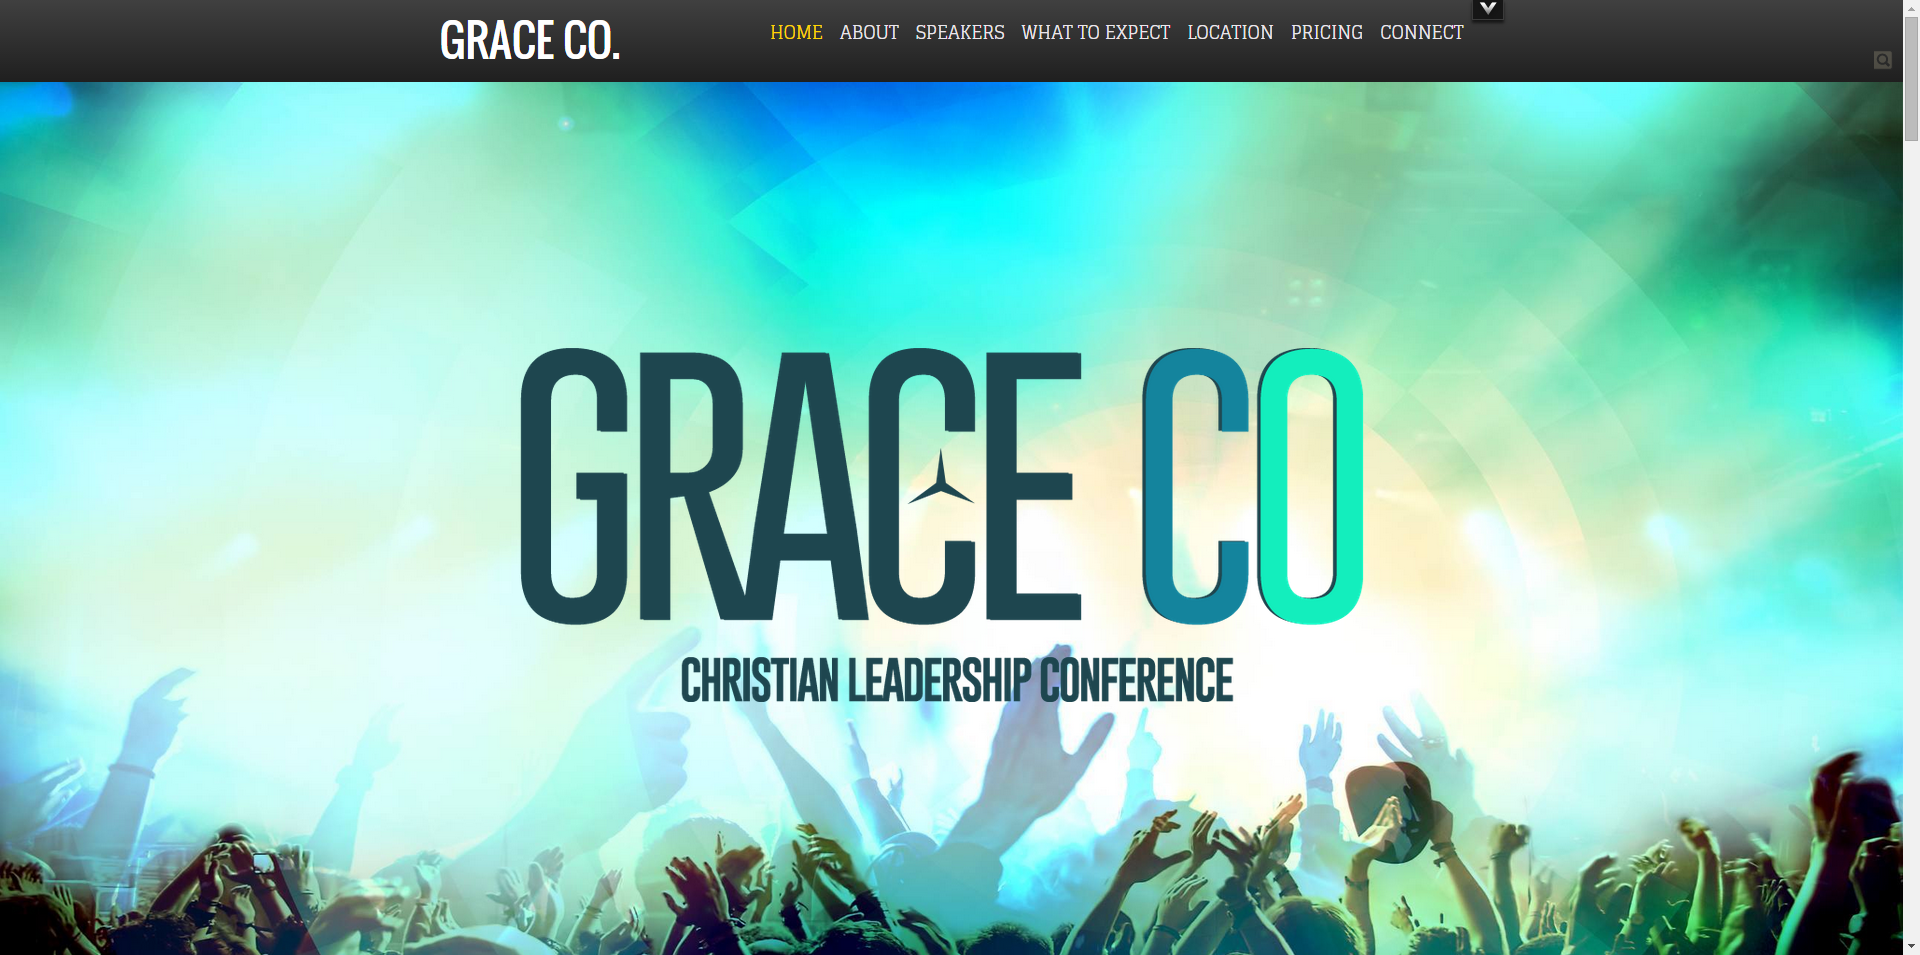 Christian Speaker Conference Website Template